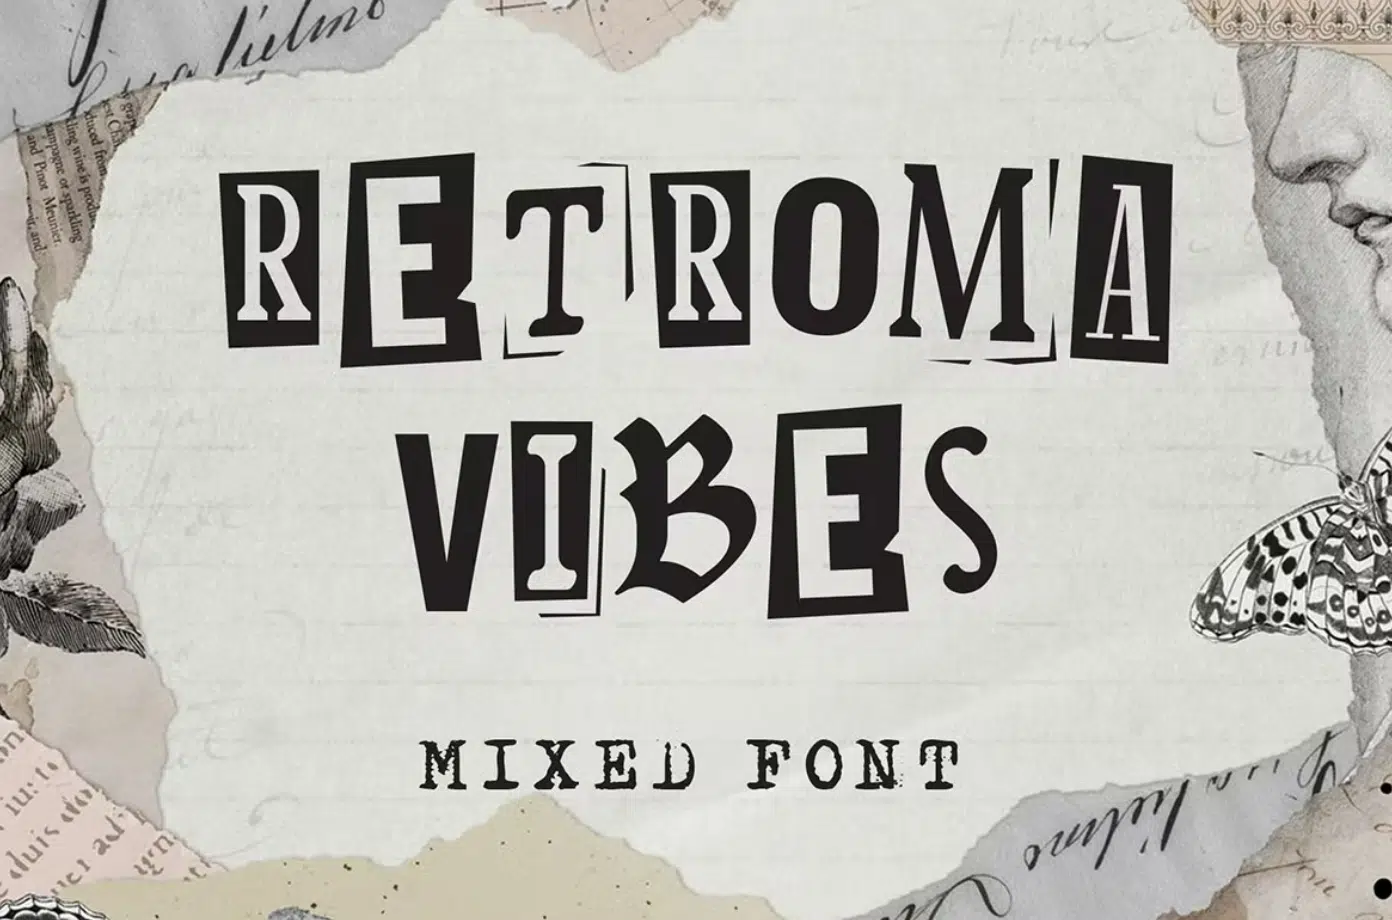 Retroma Vibes - Mixed Font